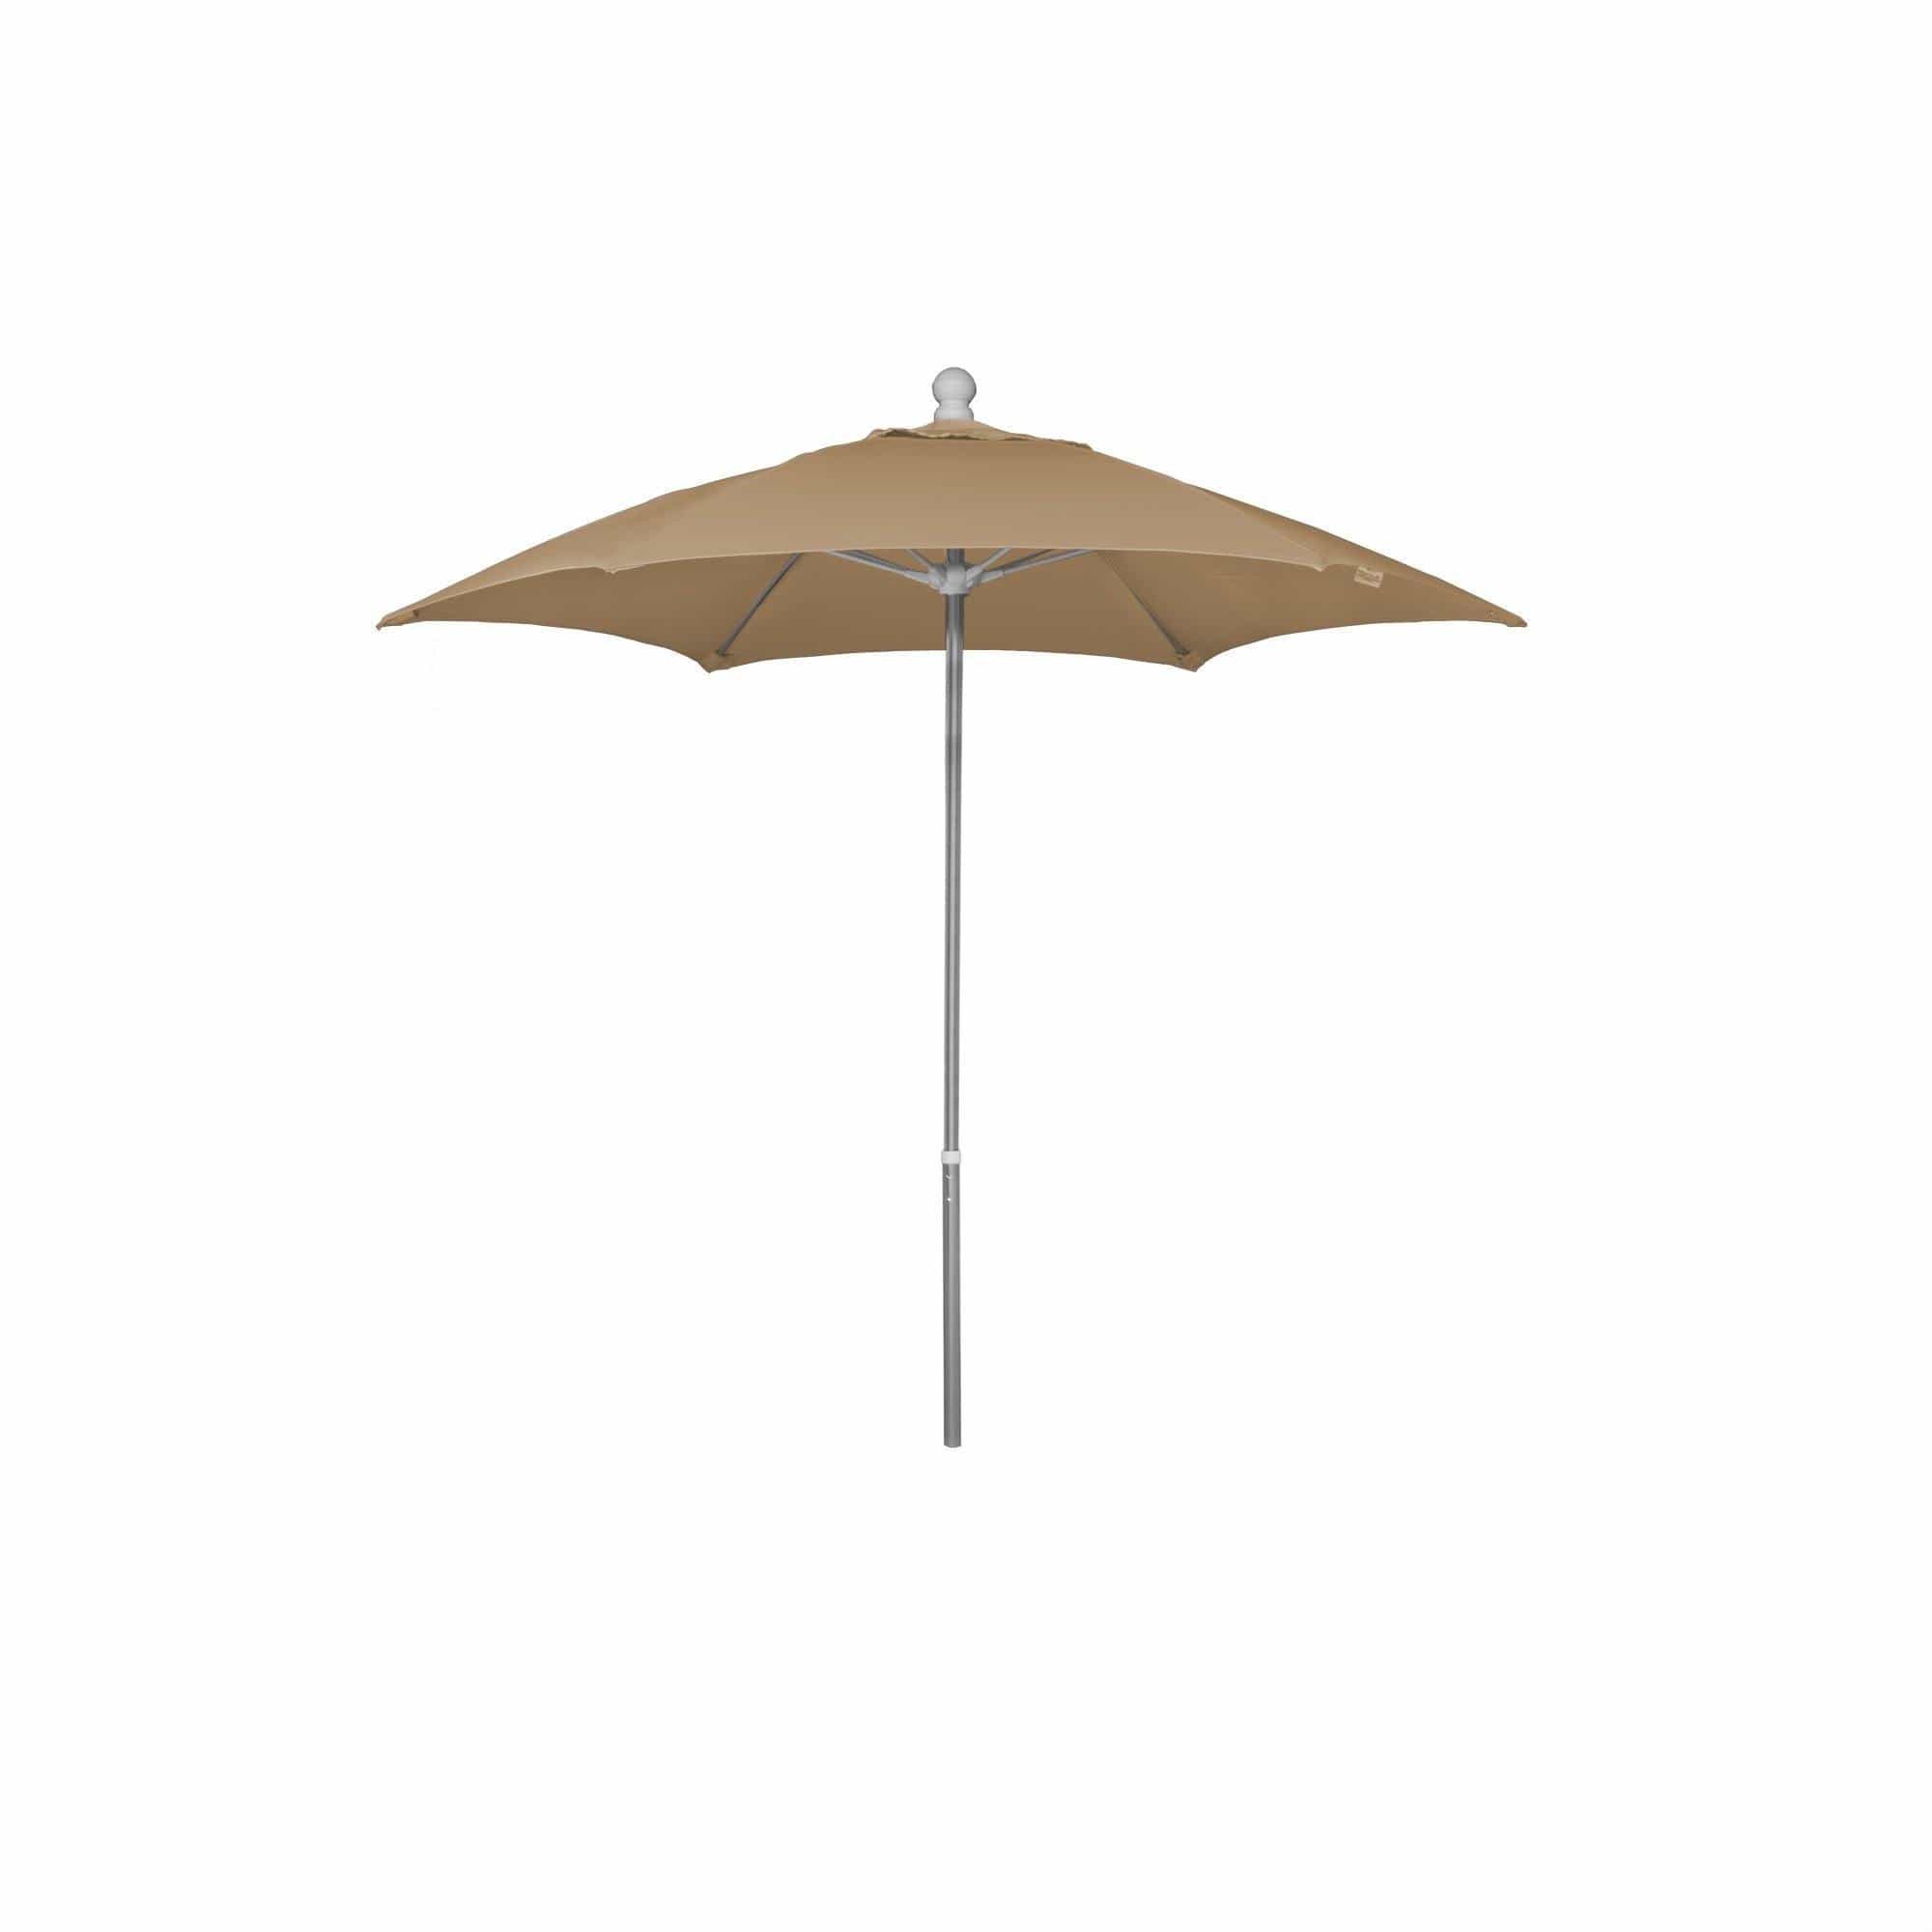 Fiberbuilt Table Umbrellas Beige 7.5' Hex Terrace Umbrella 6 Rib Push Up Bright Aluminum  Solution Dyed Acrylic Canopy